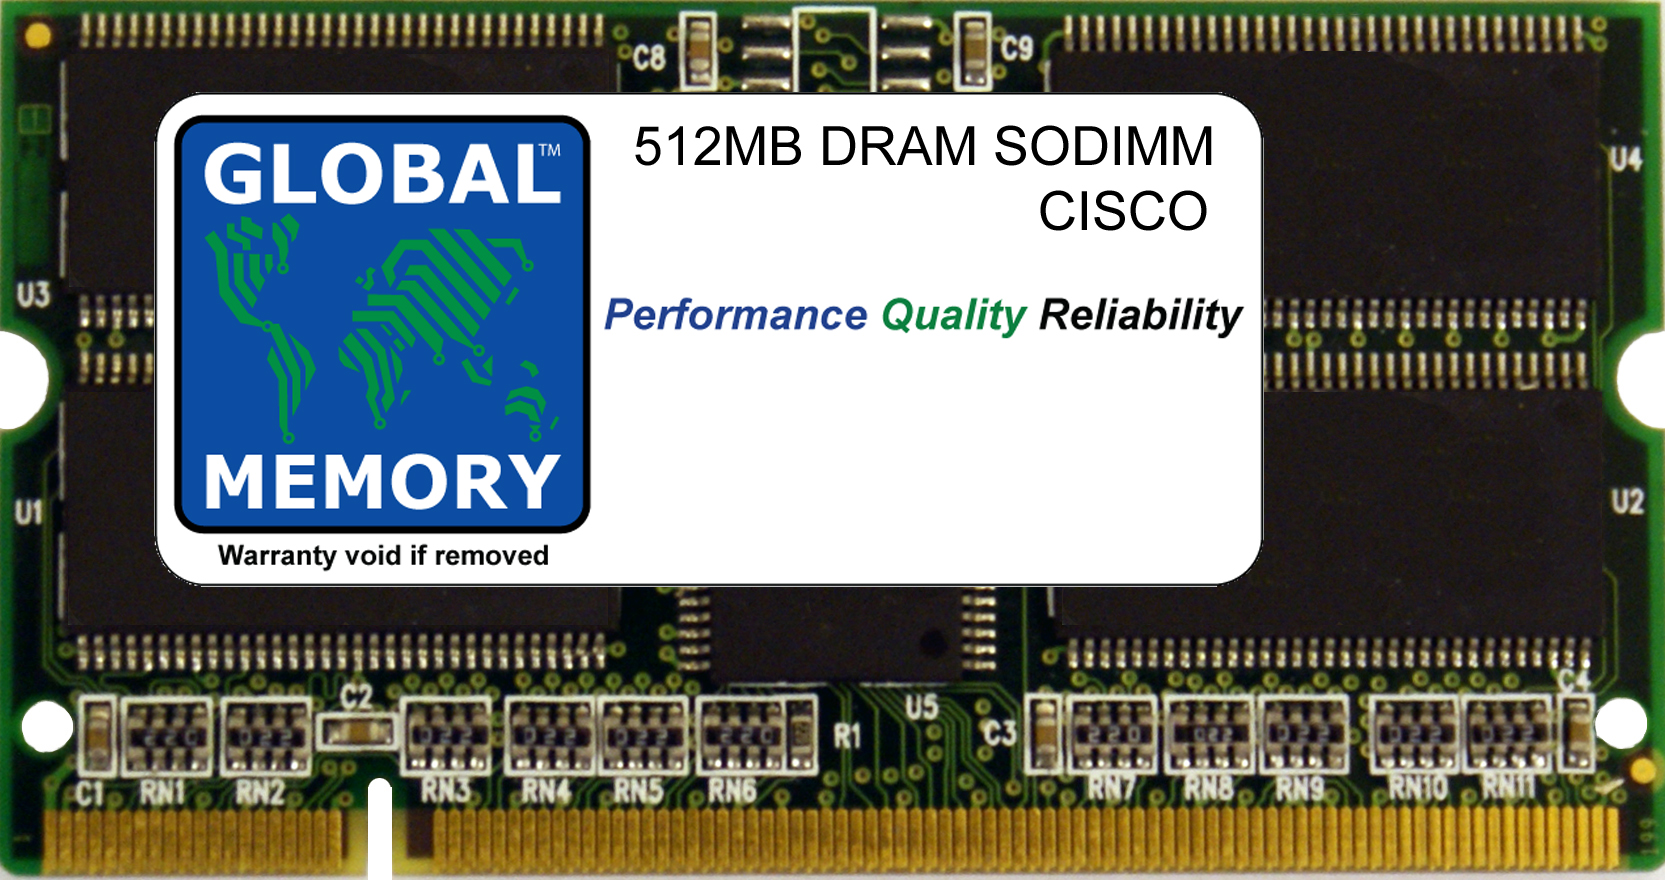 512MB DRAM SODIMM MEMORY RAM FOR CISCO 7600 SERIES ROUTERS SUPERVISOR ENGINE & ROUTE SWITCH PROCESSOR (MEM-SIP-200-512M)